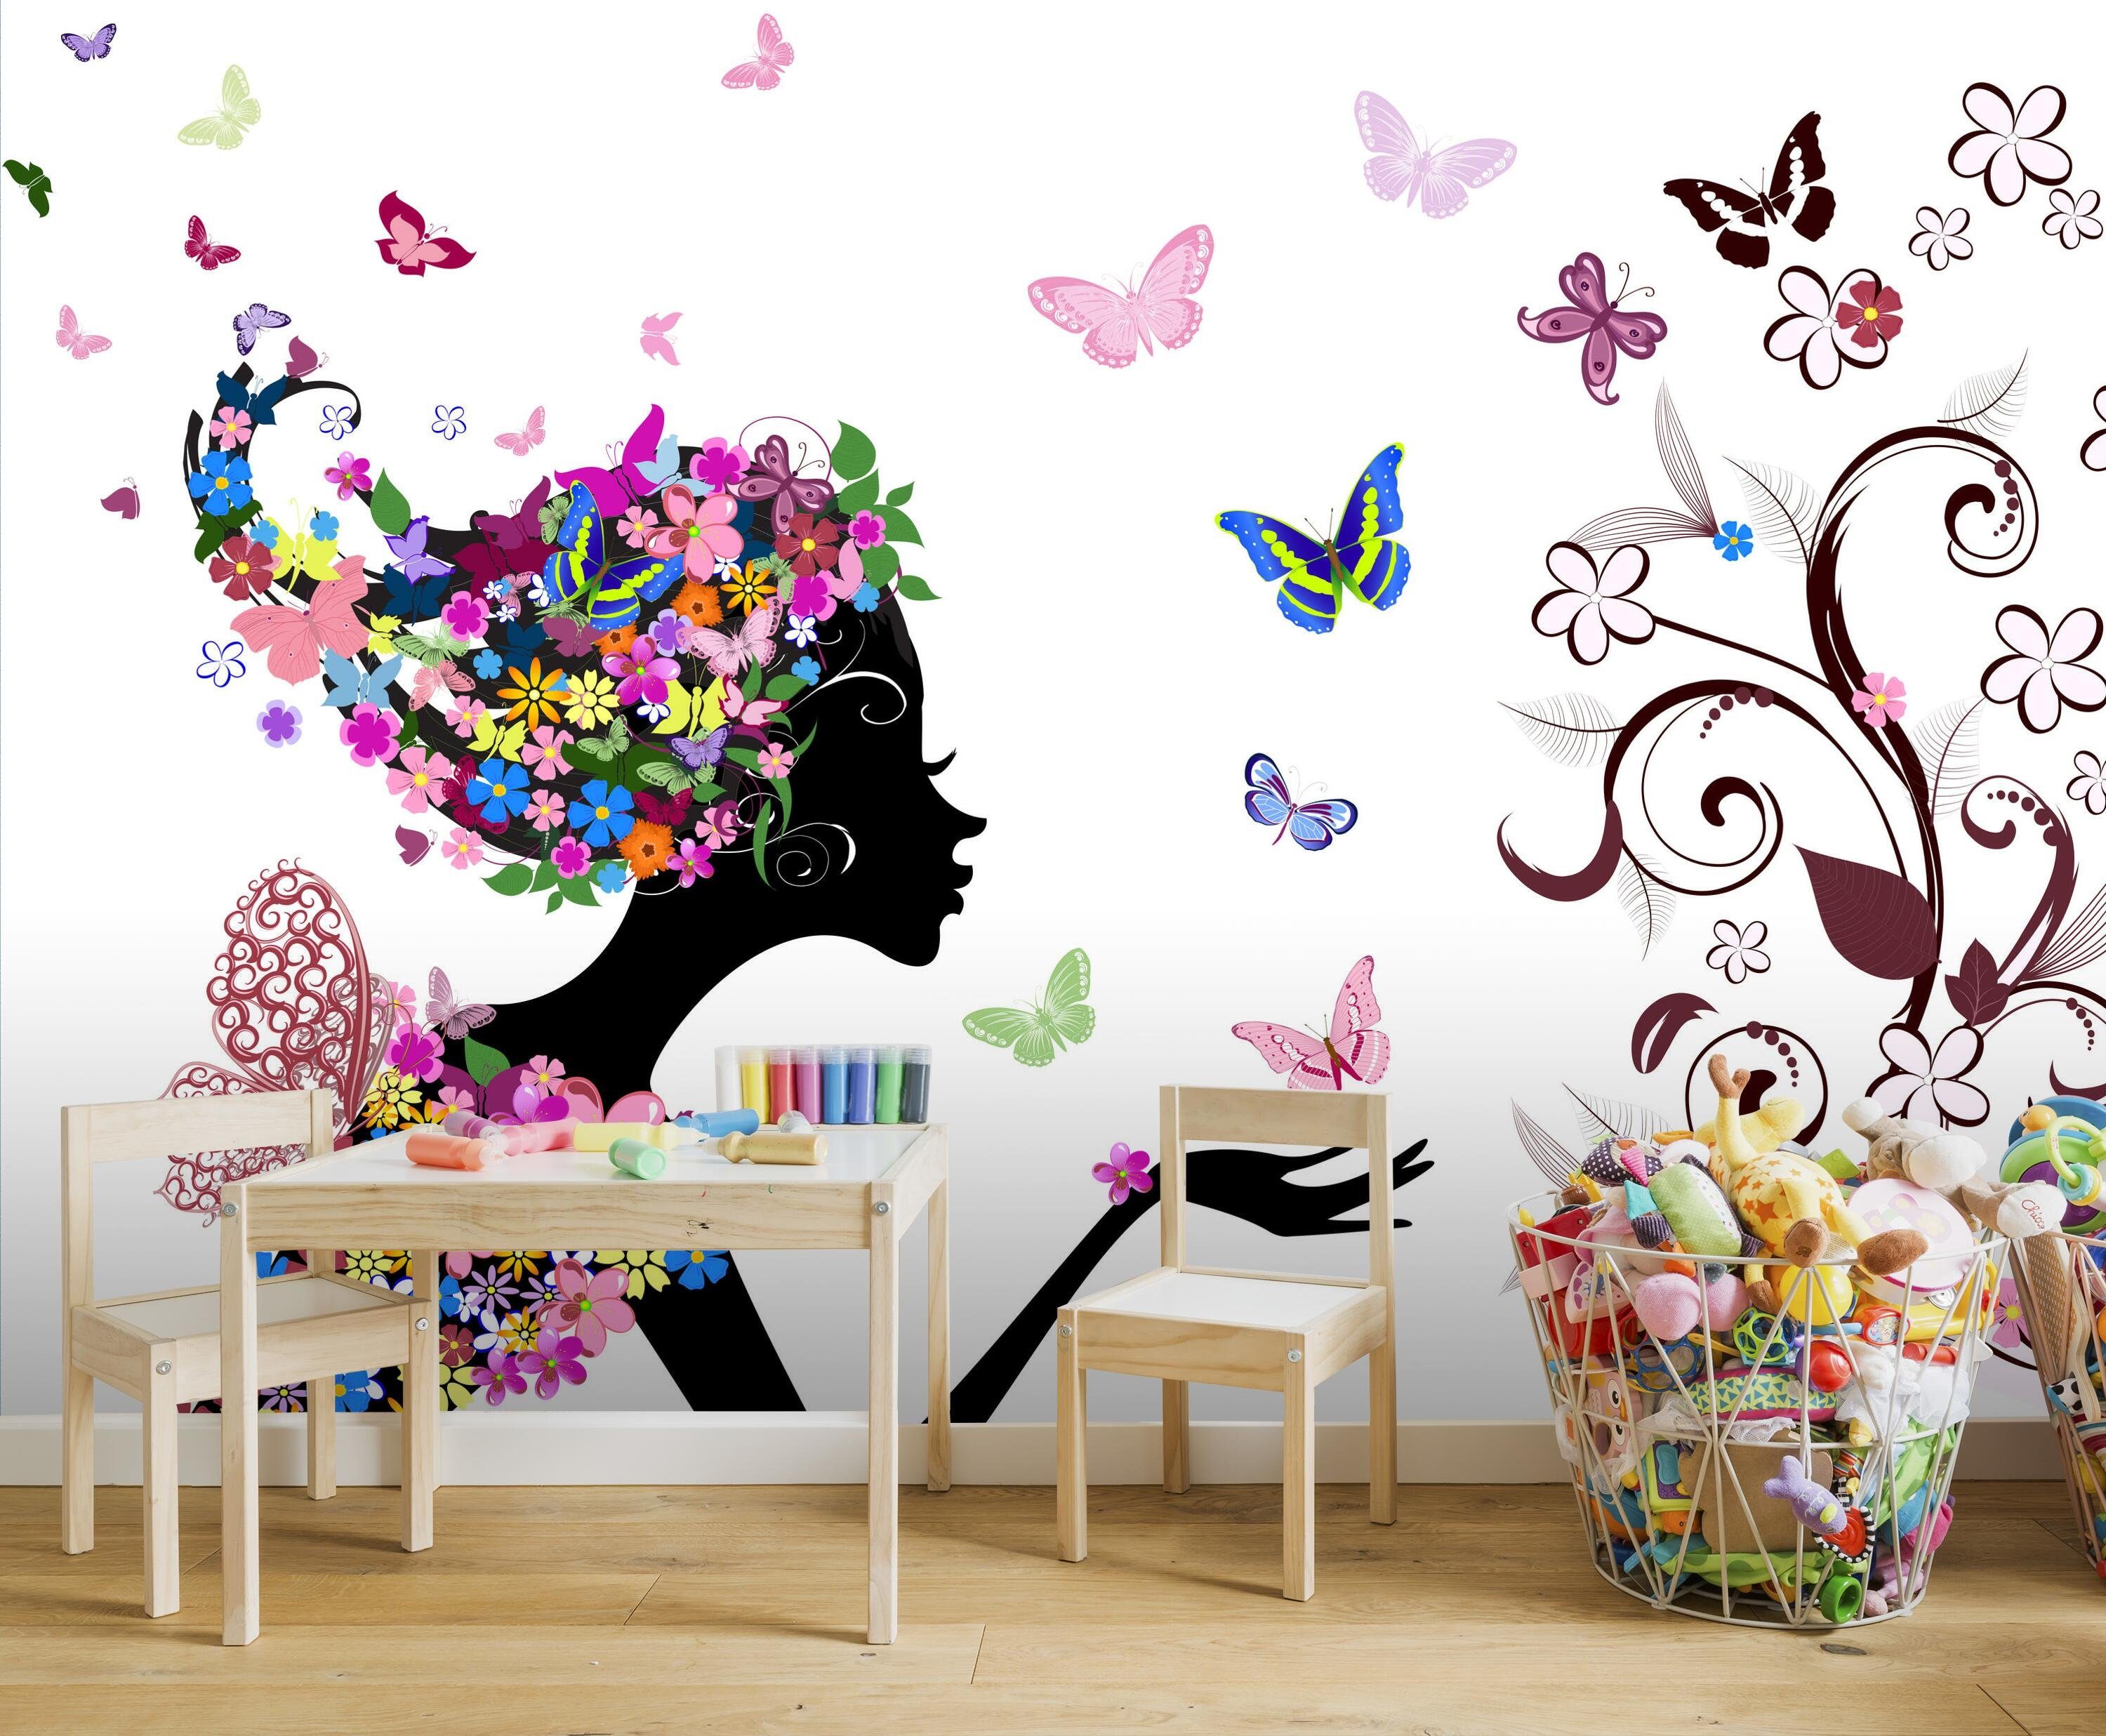 Schmetterlinge, wandmotiv24 matt, Elfe Blumen Motivtapete, Fototapete Wandtapete, Silhouette glatt, Vliestapete